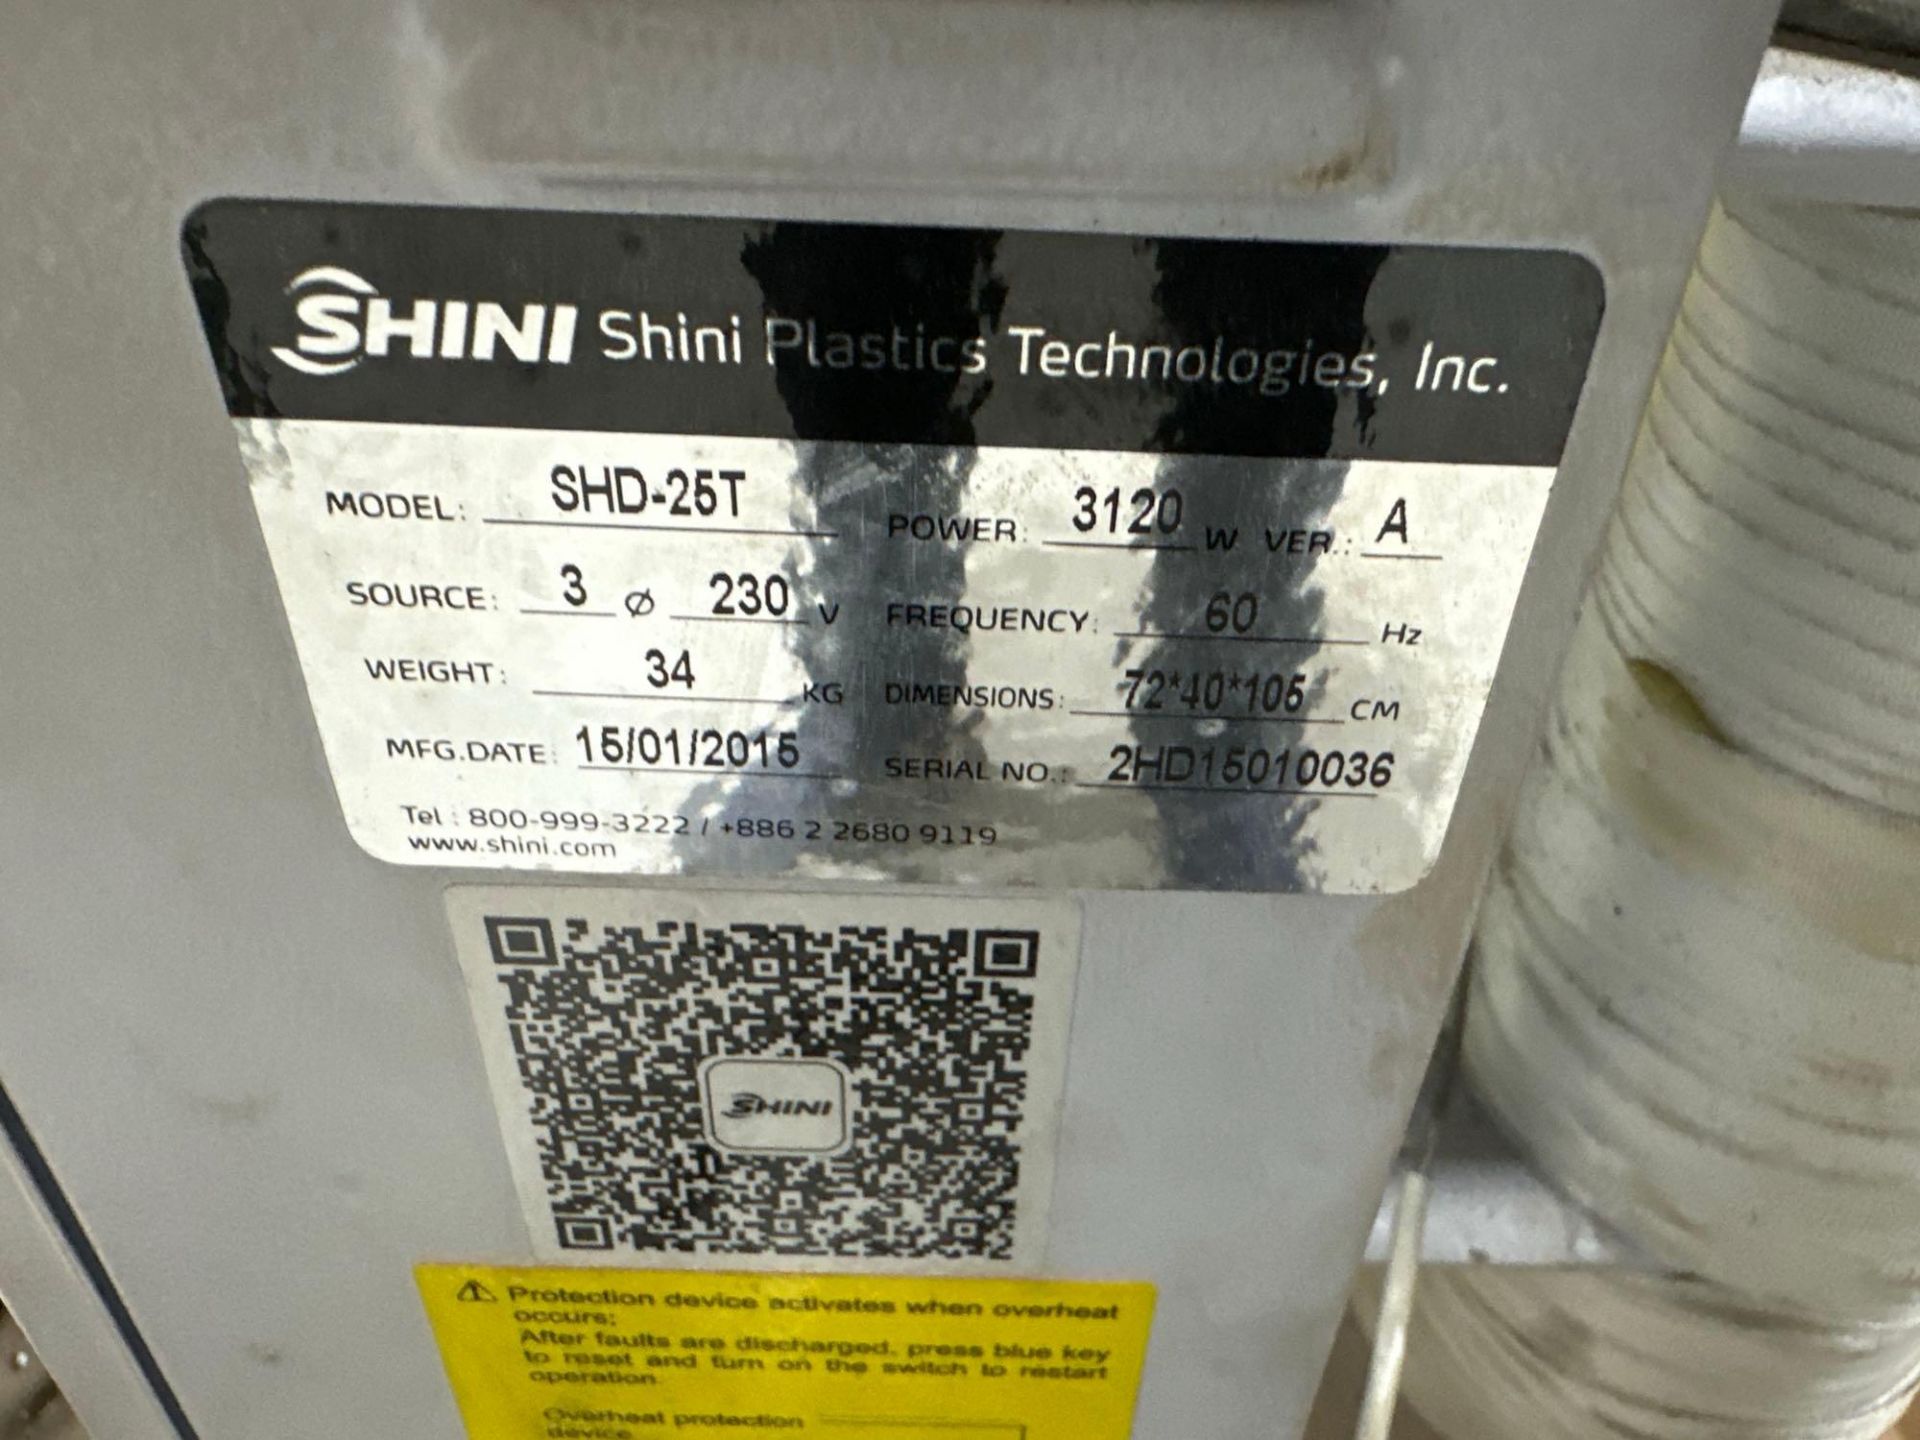 Shini Plasticds Technologies SHD-25T Loader Hopper Dryer, s/n 2HD15010036, 2015 - Image 5 of 5